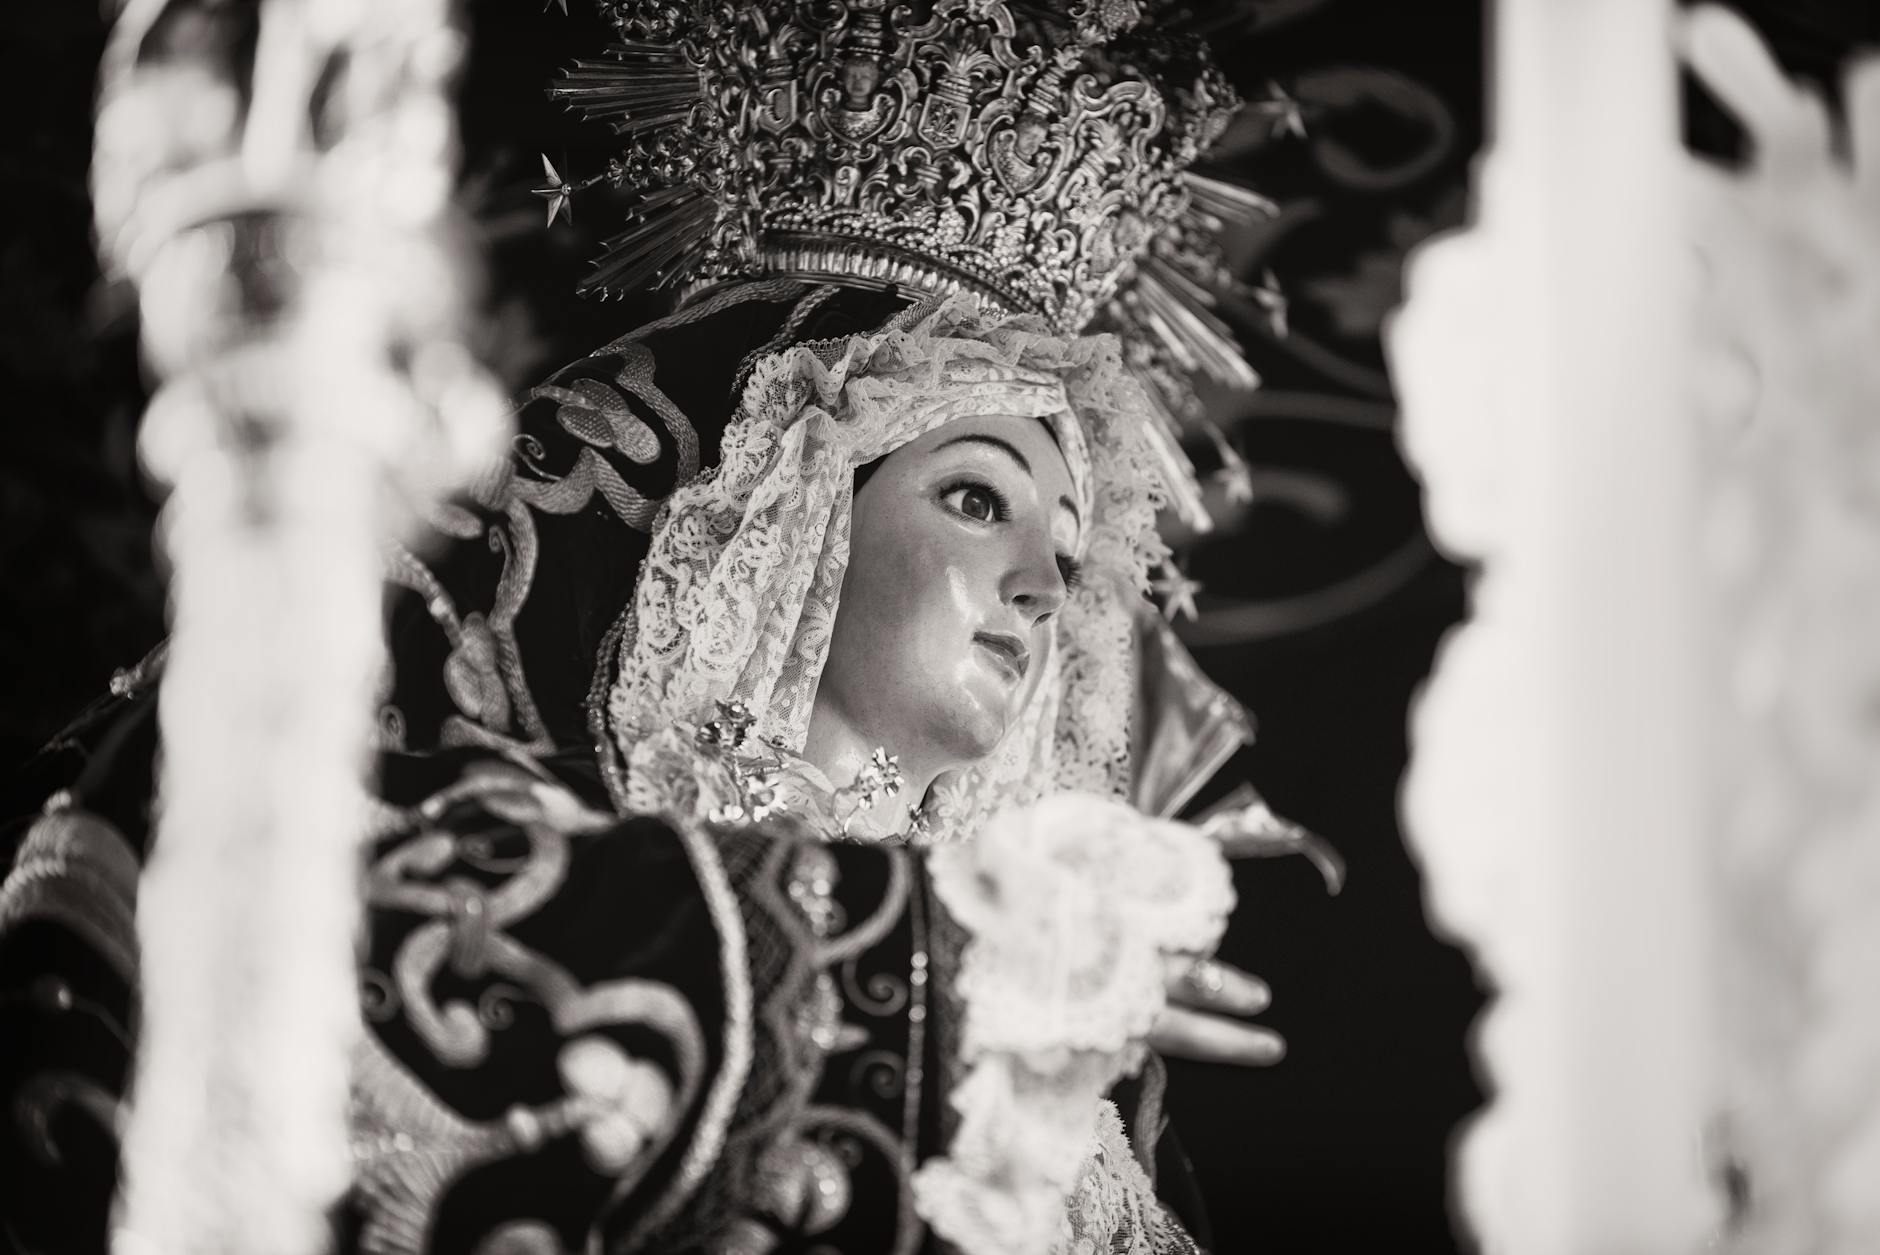 Grayscale Photo of Religious Figurine · Free Stock Photo